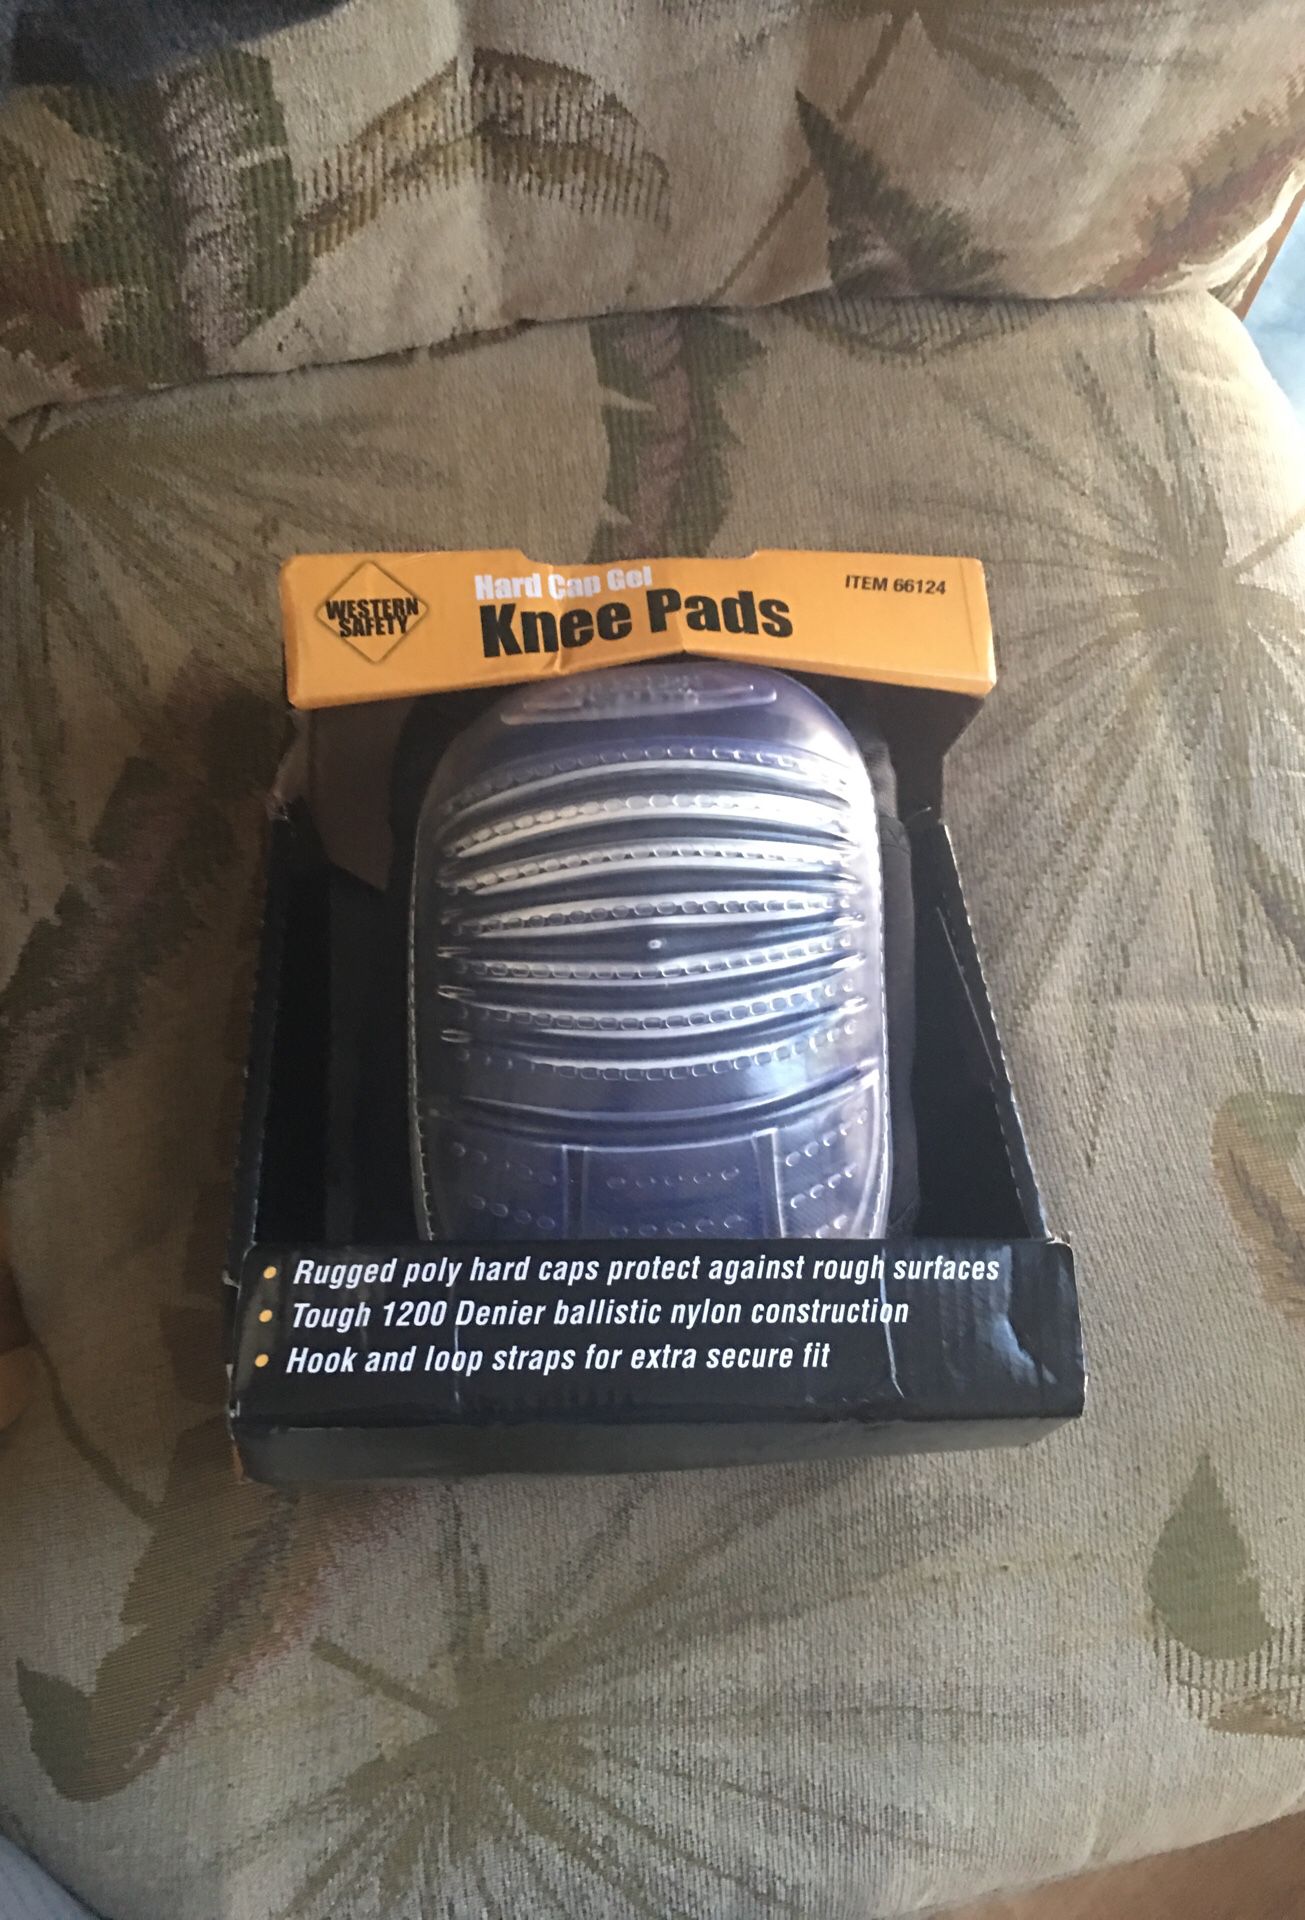 Western Safety hard cap gel knee pads